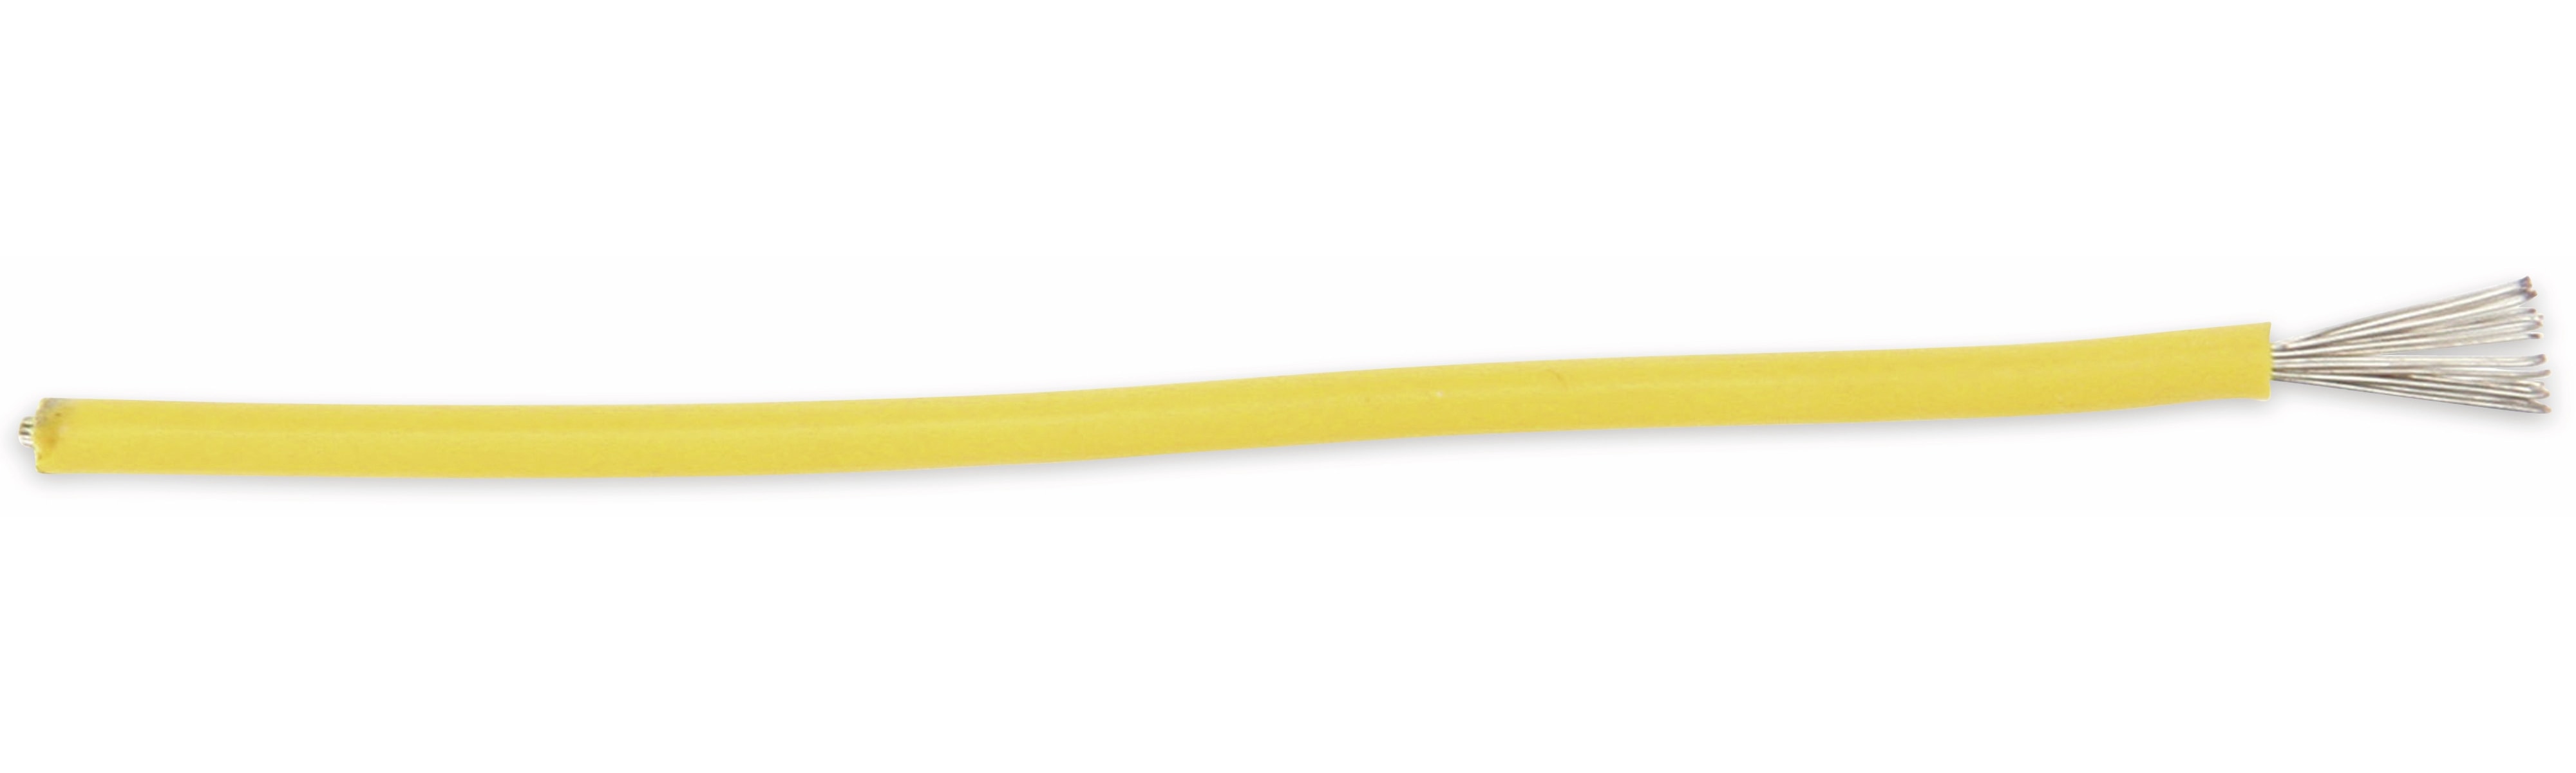 RAUTRONIC Silikon-Litze, 0,5 mm², gelb, 10 m